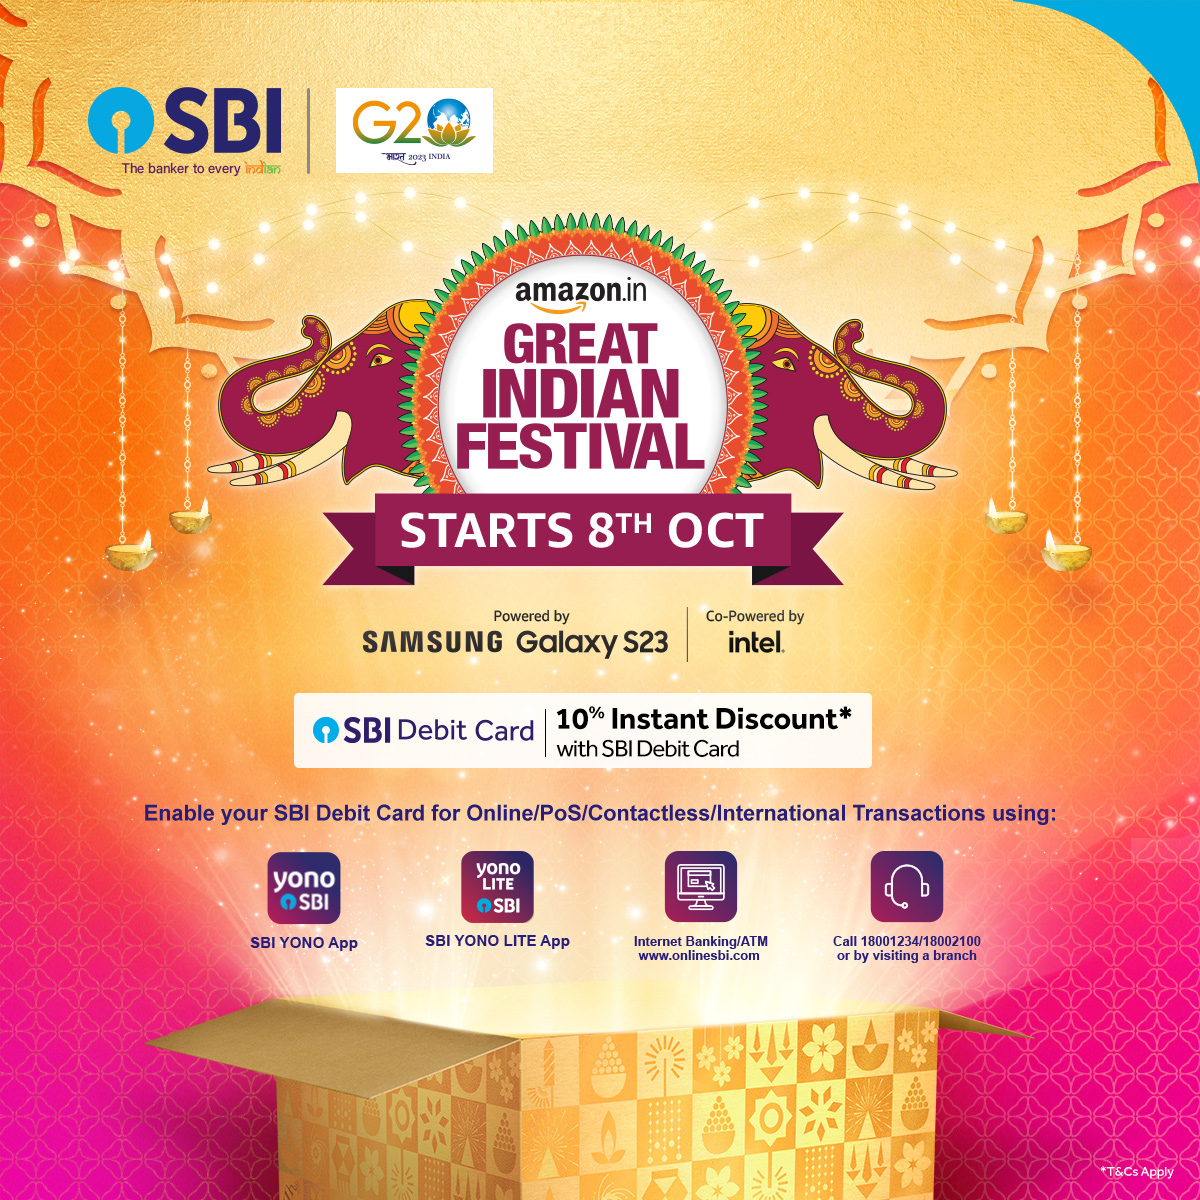 SBI’s Debit Cards are your best friends for Amazon’s Great Indian Festival. Shop till you drop and enjoy amazing discounts!

#SBI #DebitCard #DebitCardOffers